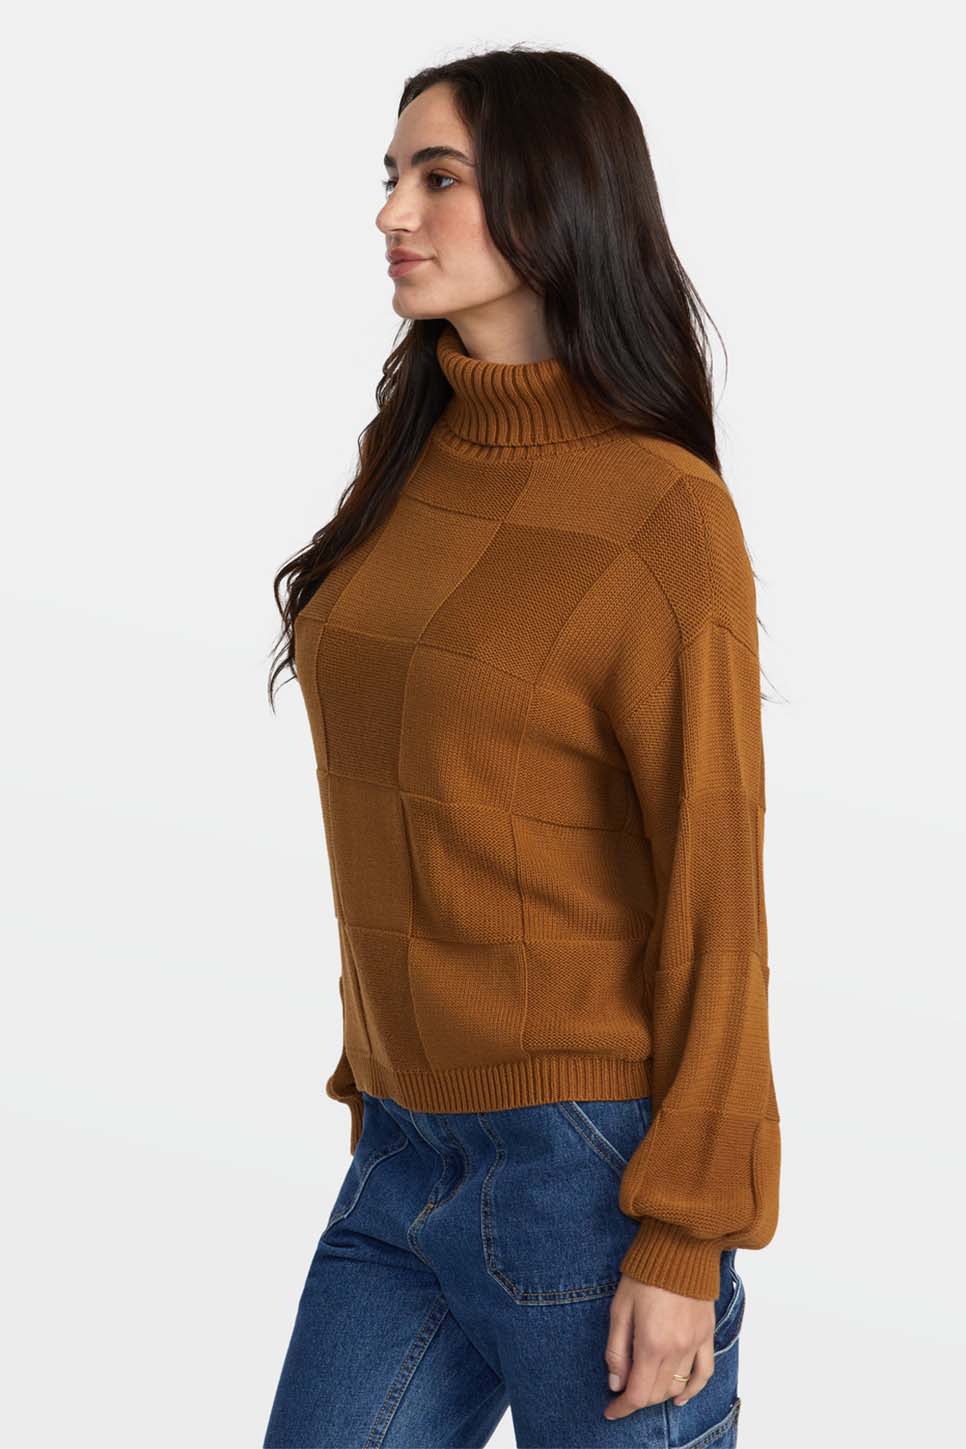 RVCA - Vineyard Sweater - Workwear Brown - Side